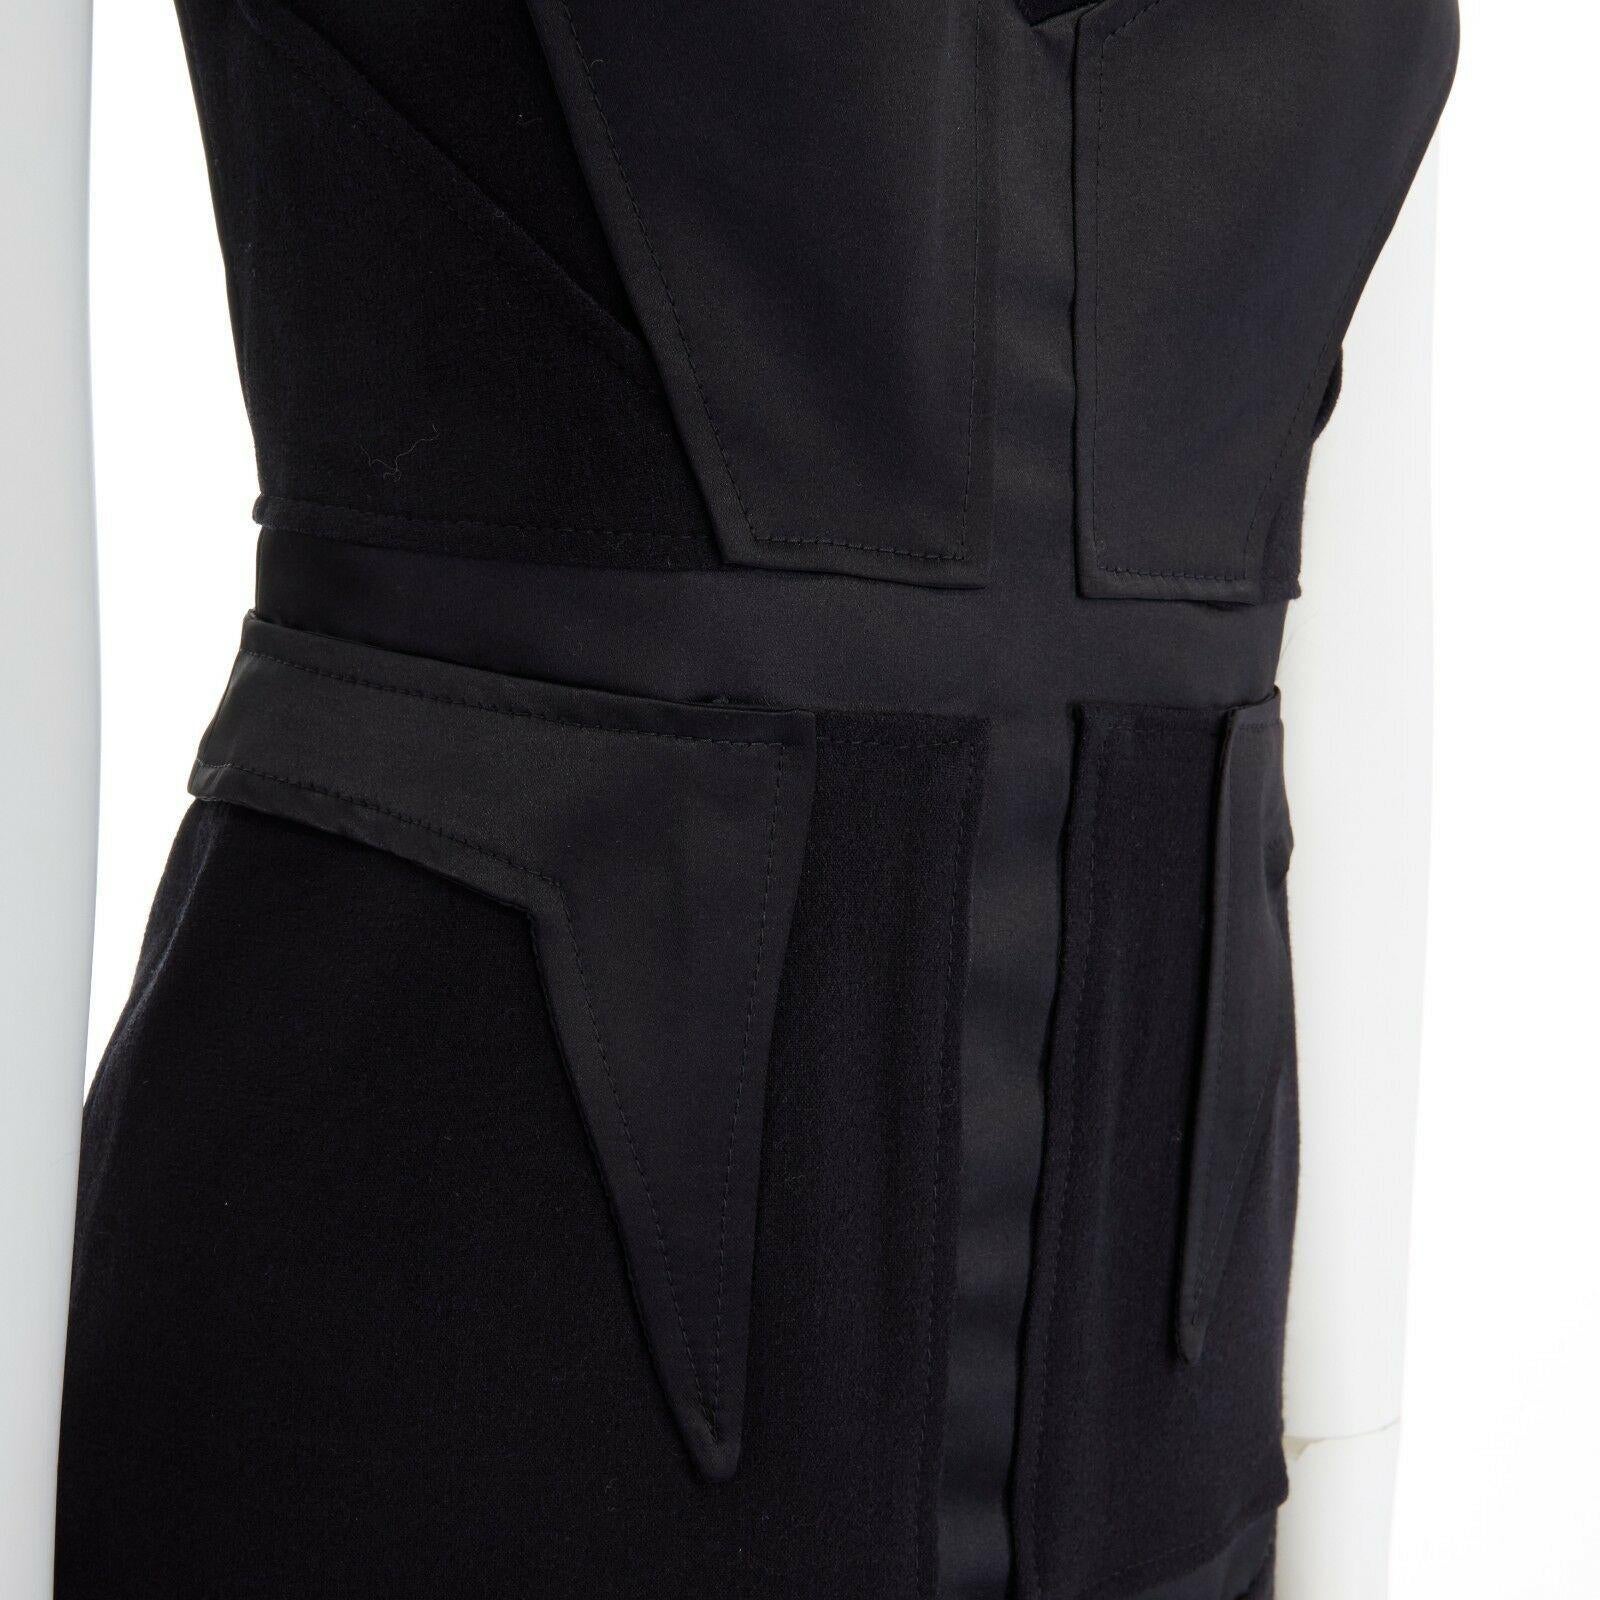 GIVENCHY TISCI 2011 black angular patched sheer skirt layer dress FR38 M 4